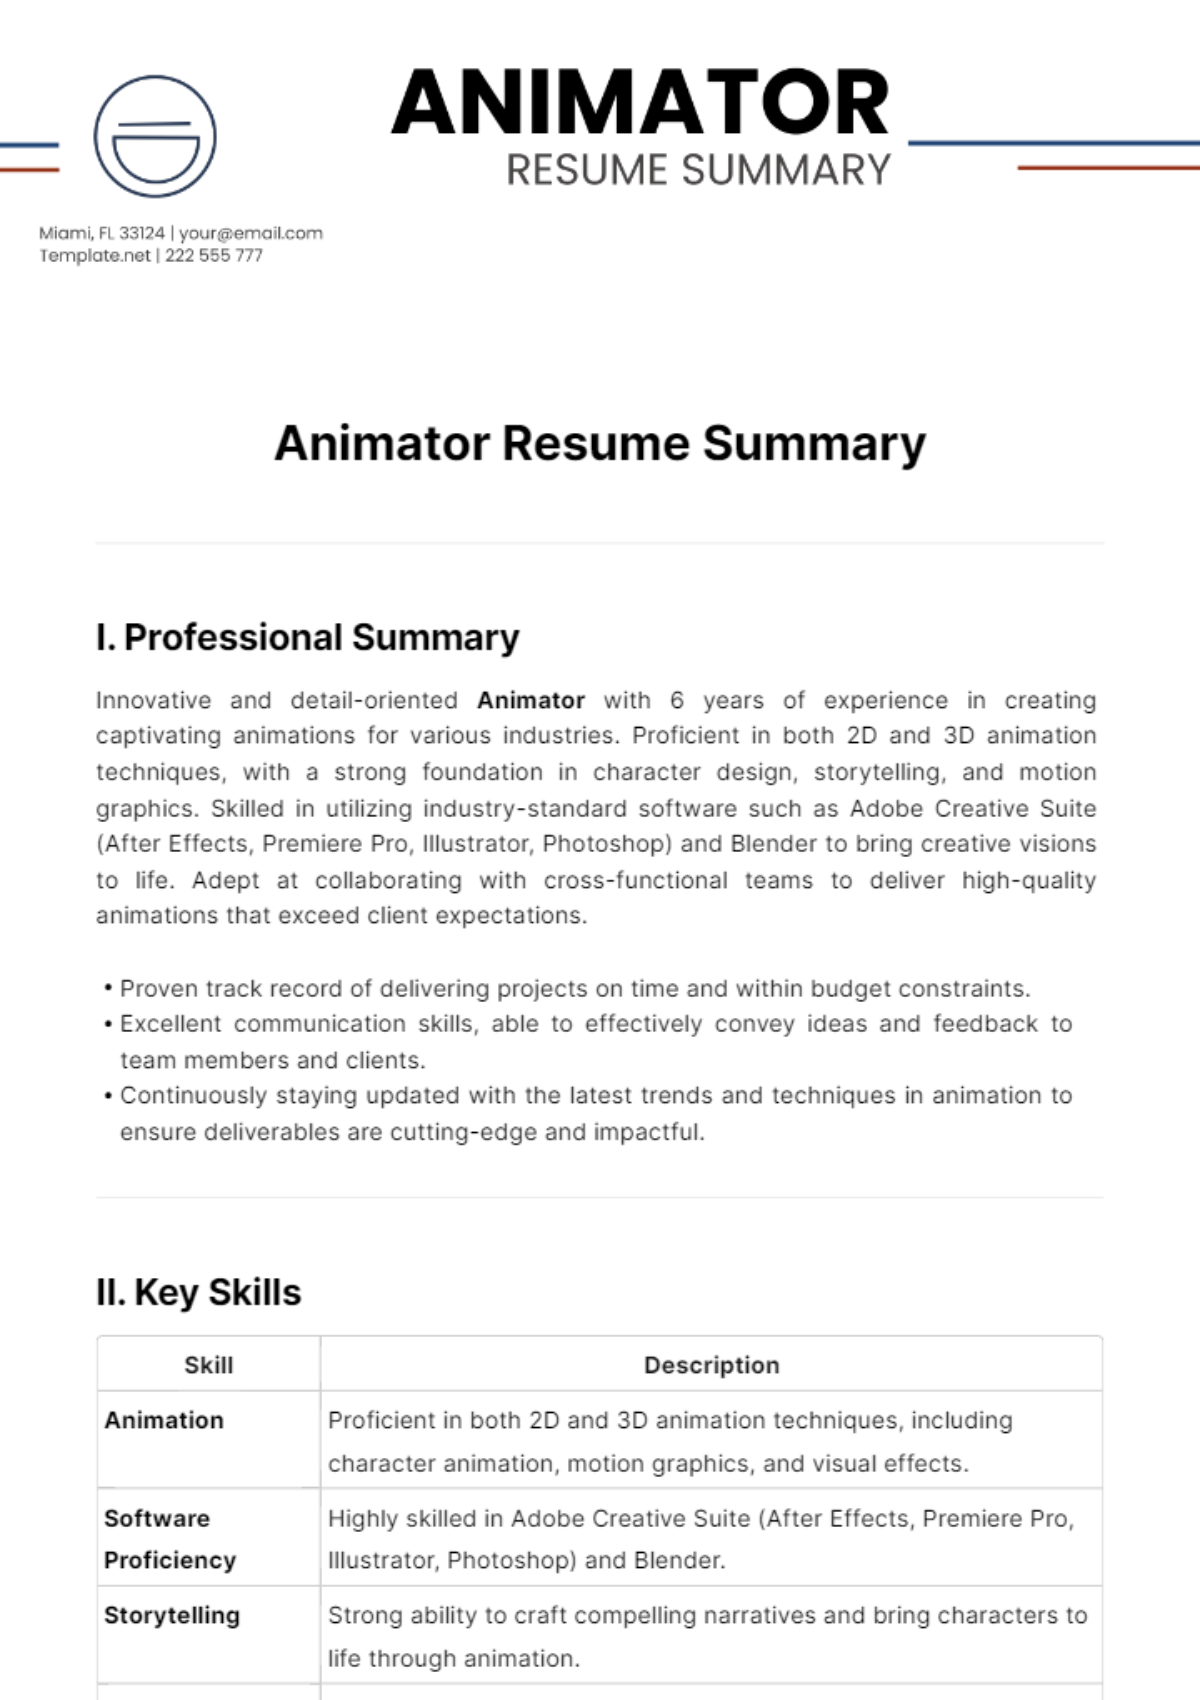 Free Animator Resume Summary Template